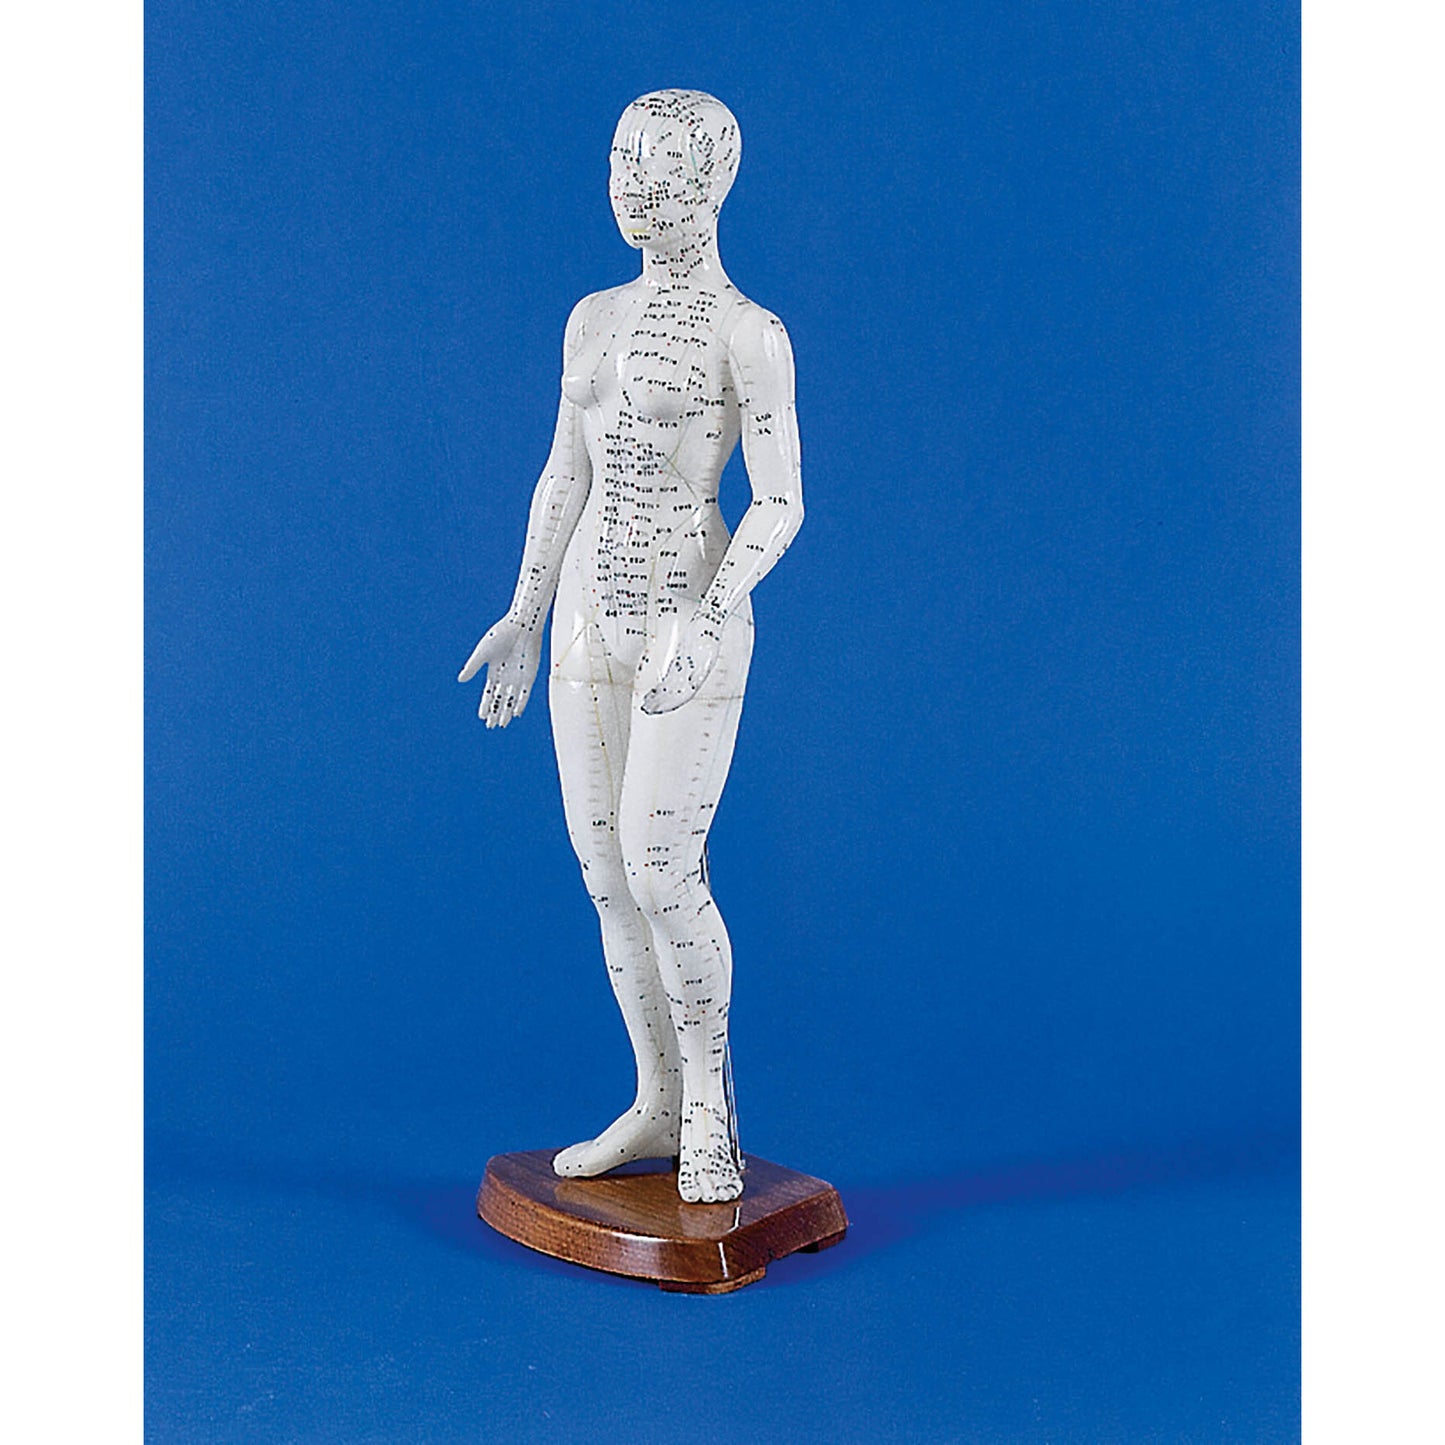 Chinese Acupuncture Figure - Female - Erler Zimmer